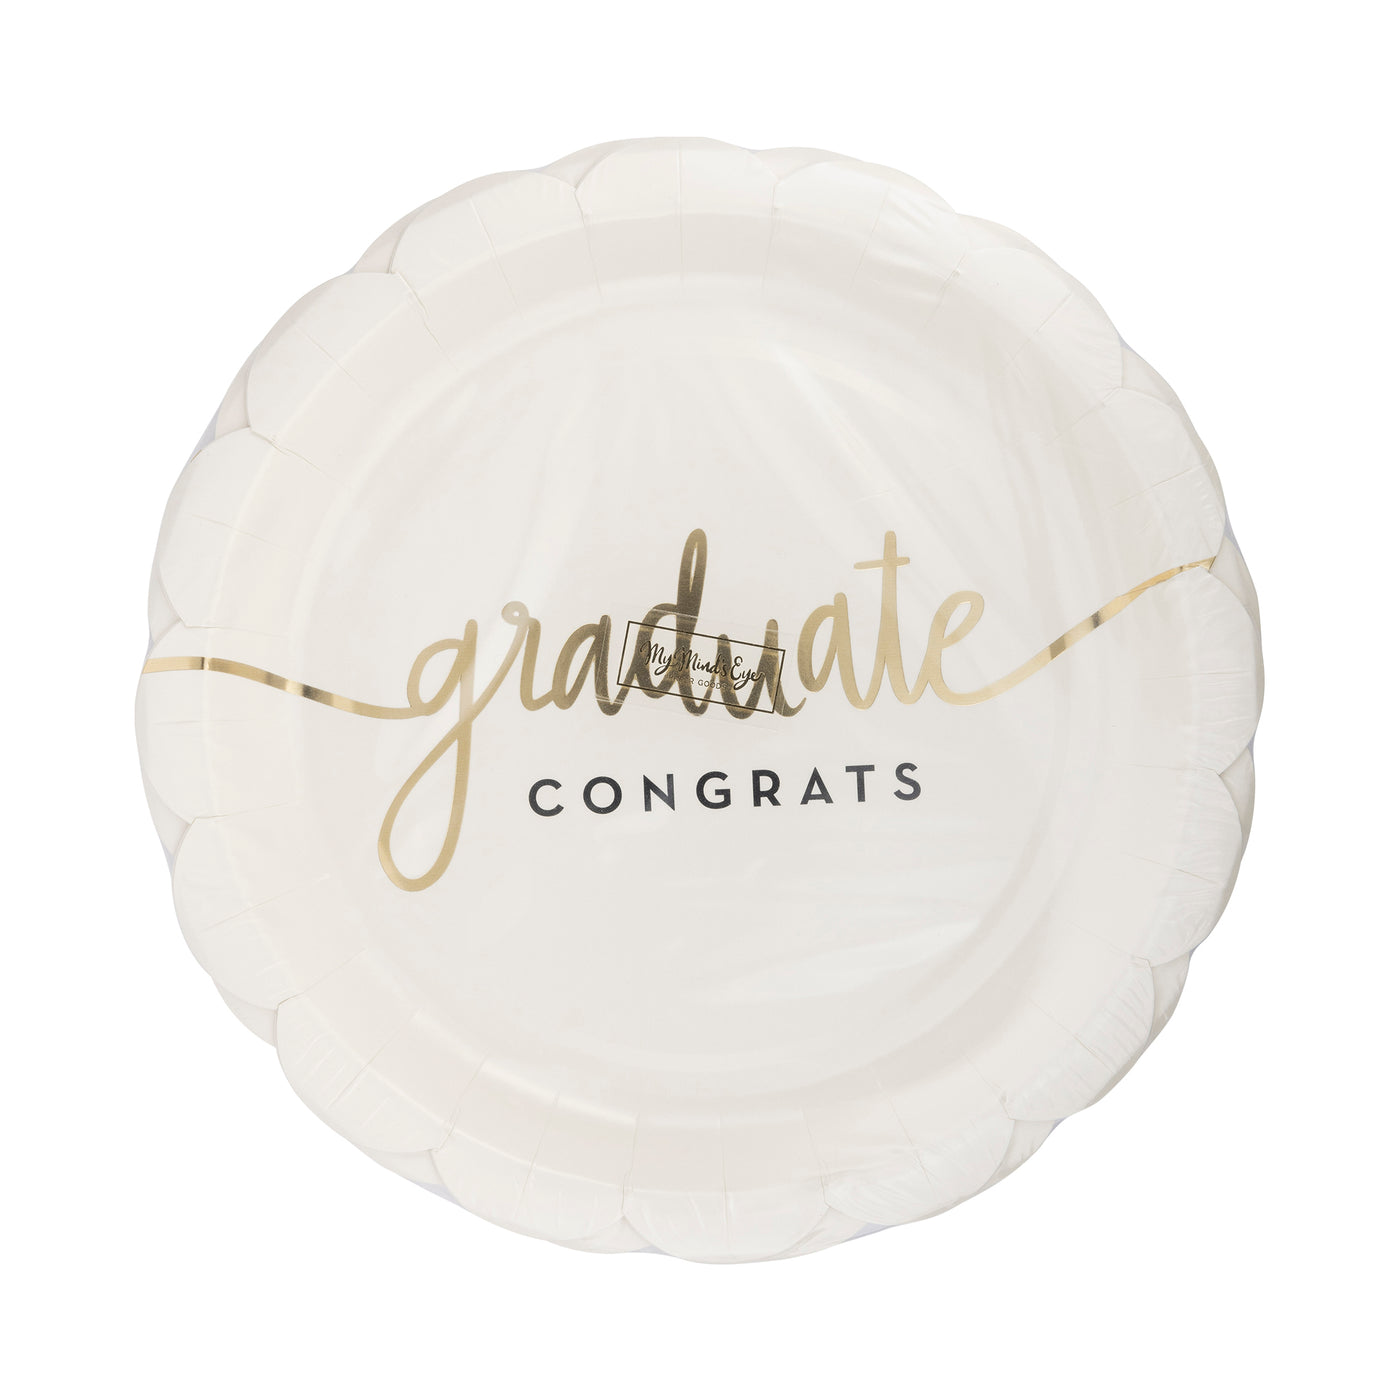 GRD1042 - Graduate Congrats Paper Plate